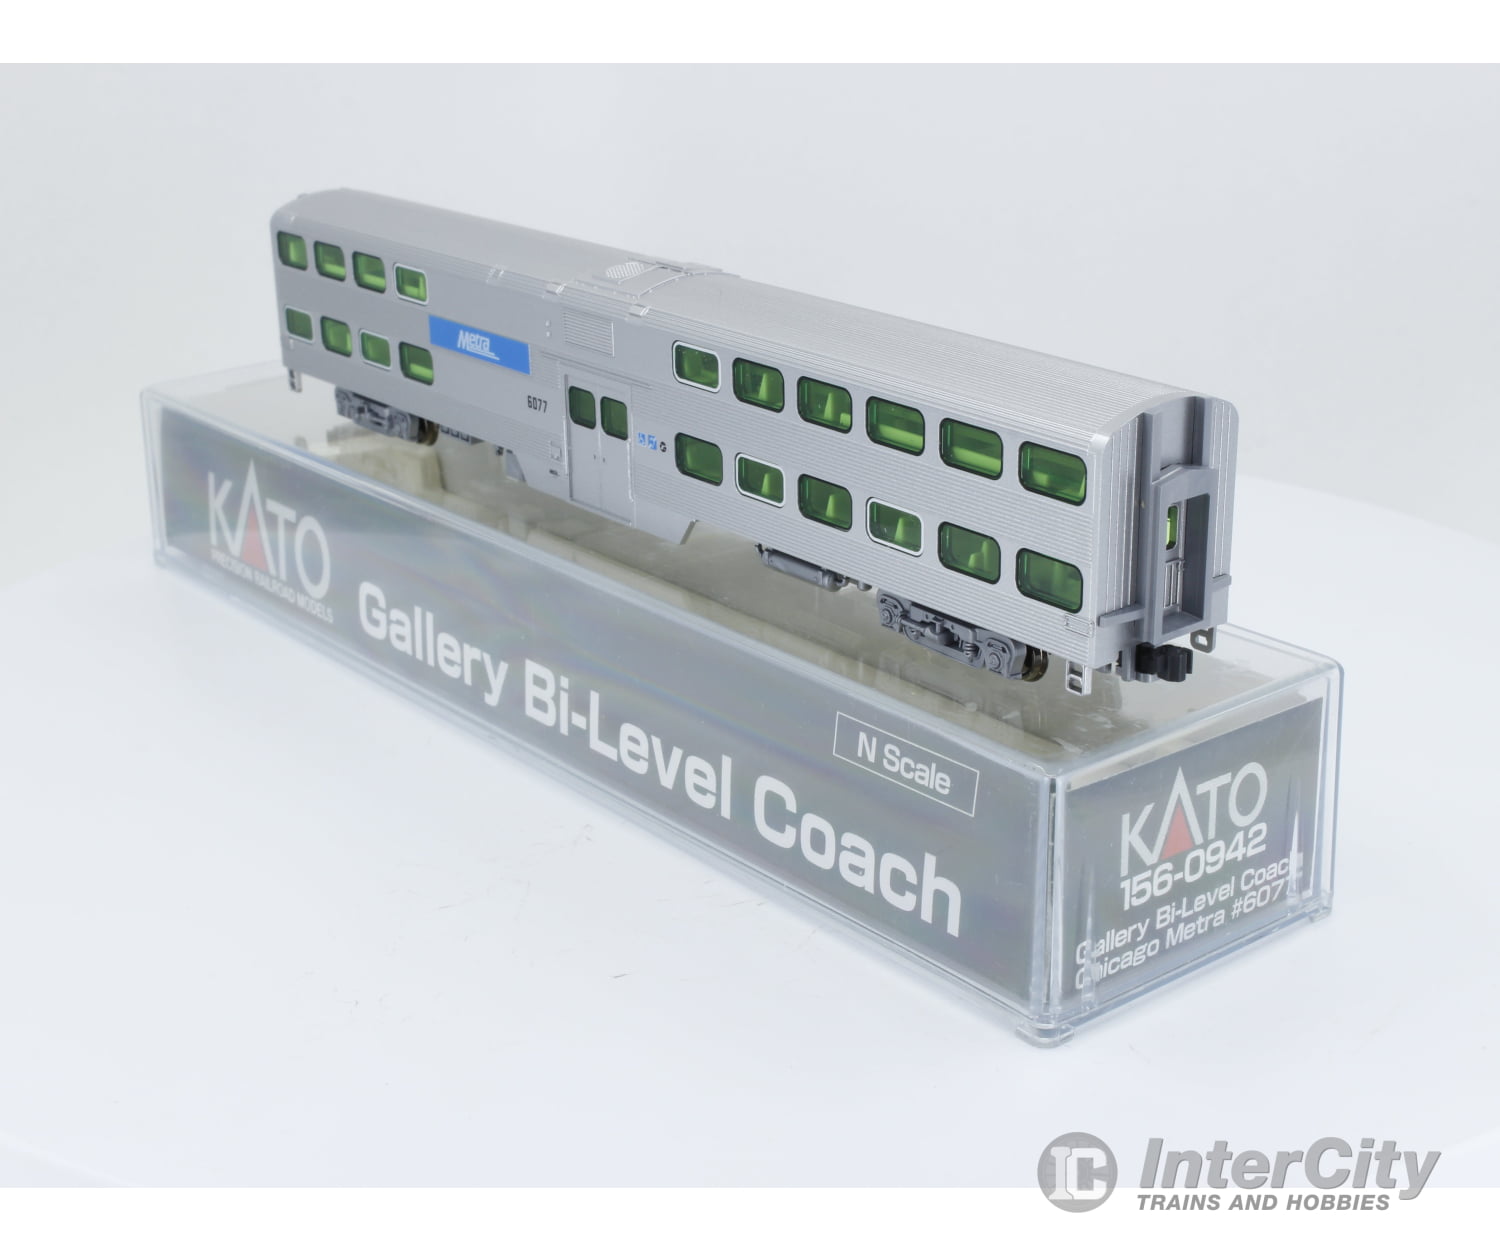 Kato 156-0942 N Gallery Bi-Level Coach Chicago Metra (Metx) 6077 Passenger Cars